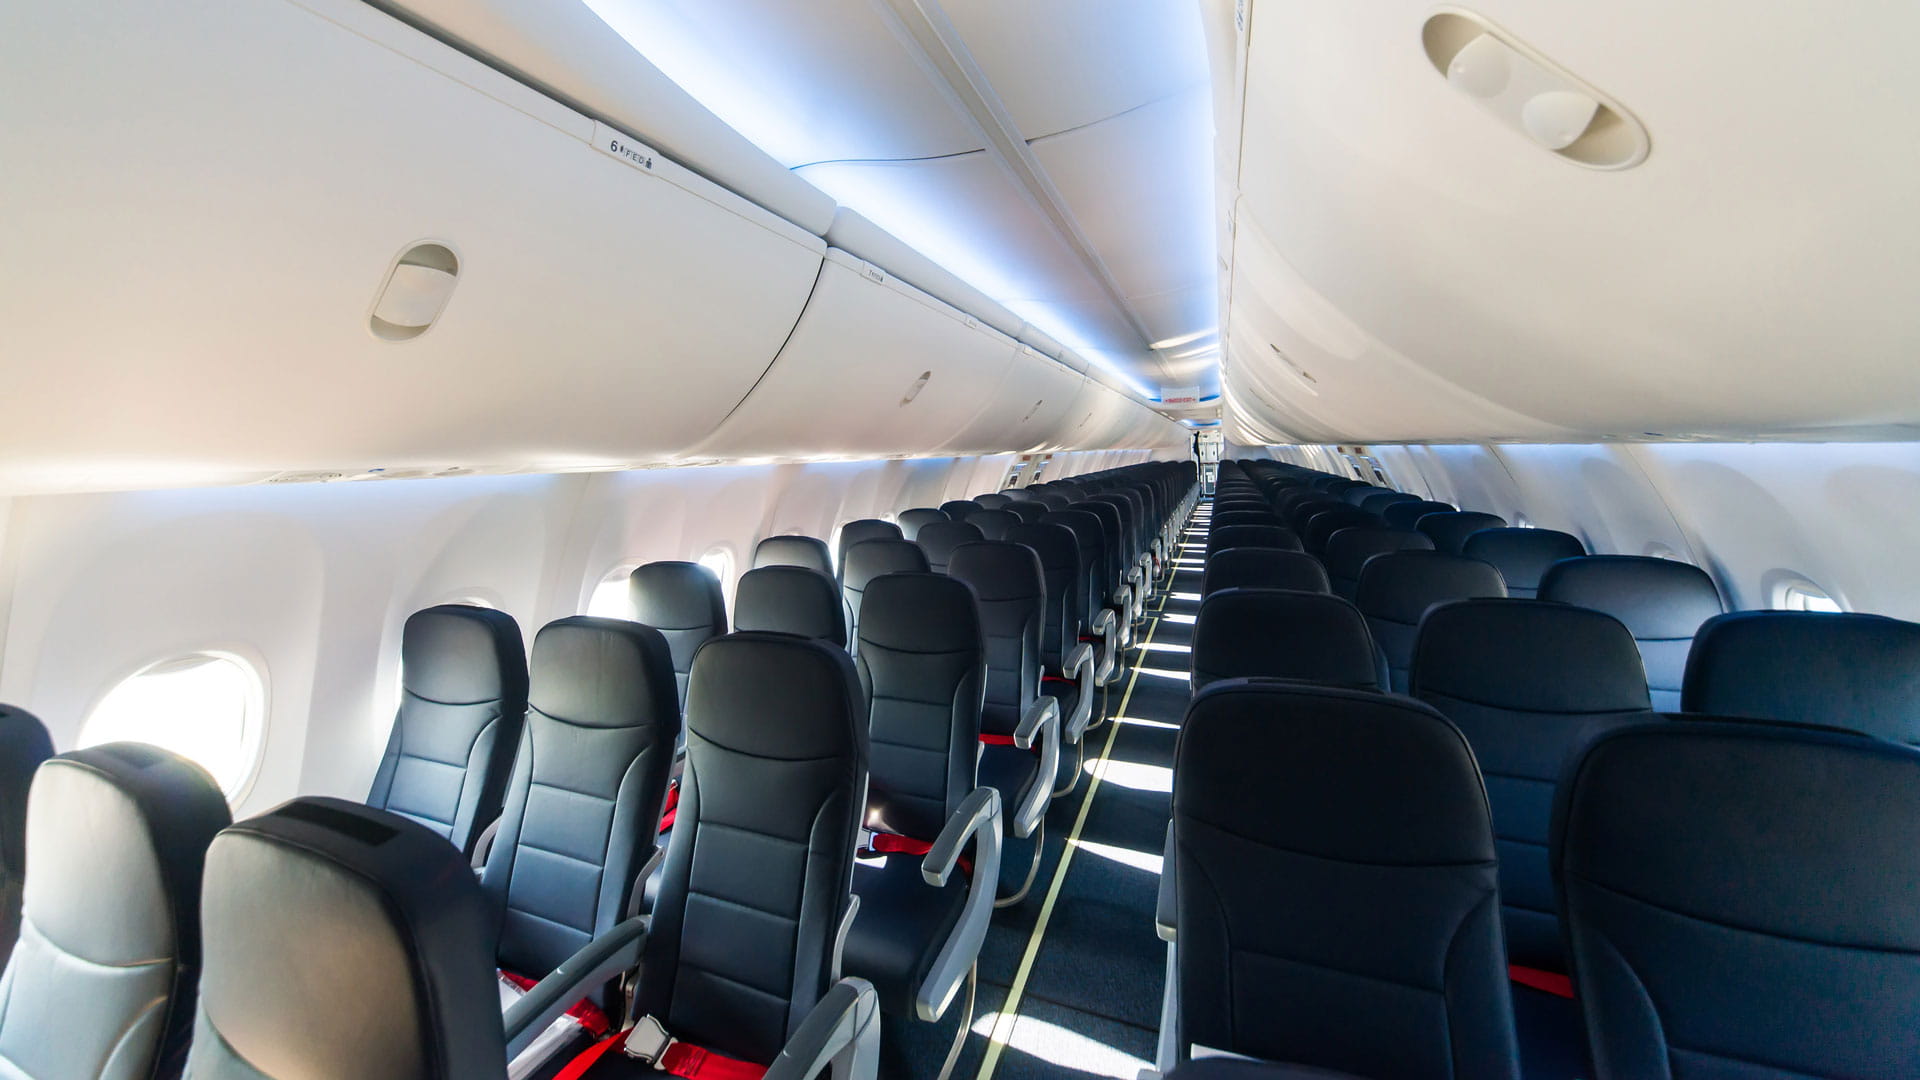 Economy class cabin in a modern civil airplane